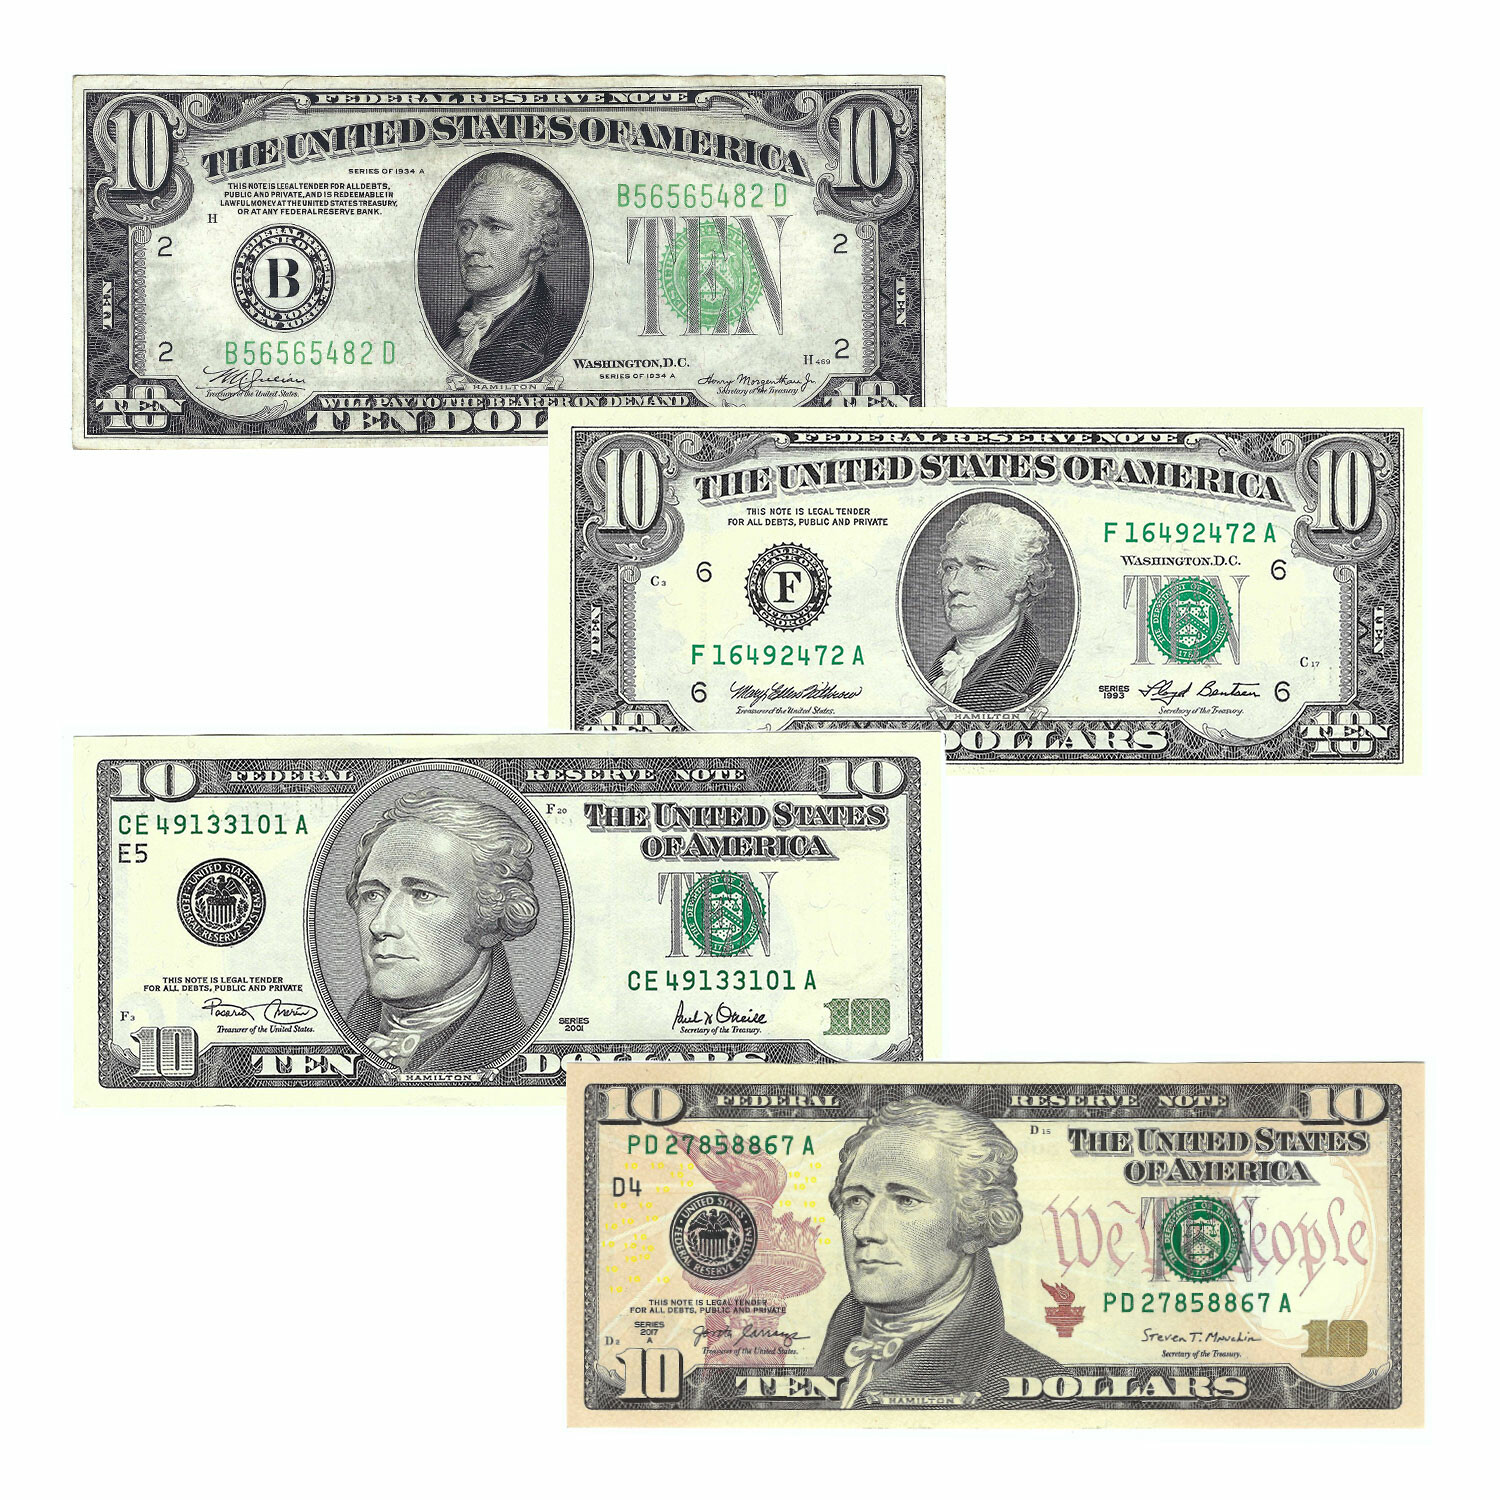 Evolution of the $10 bill